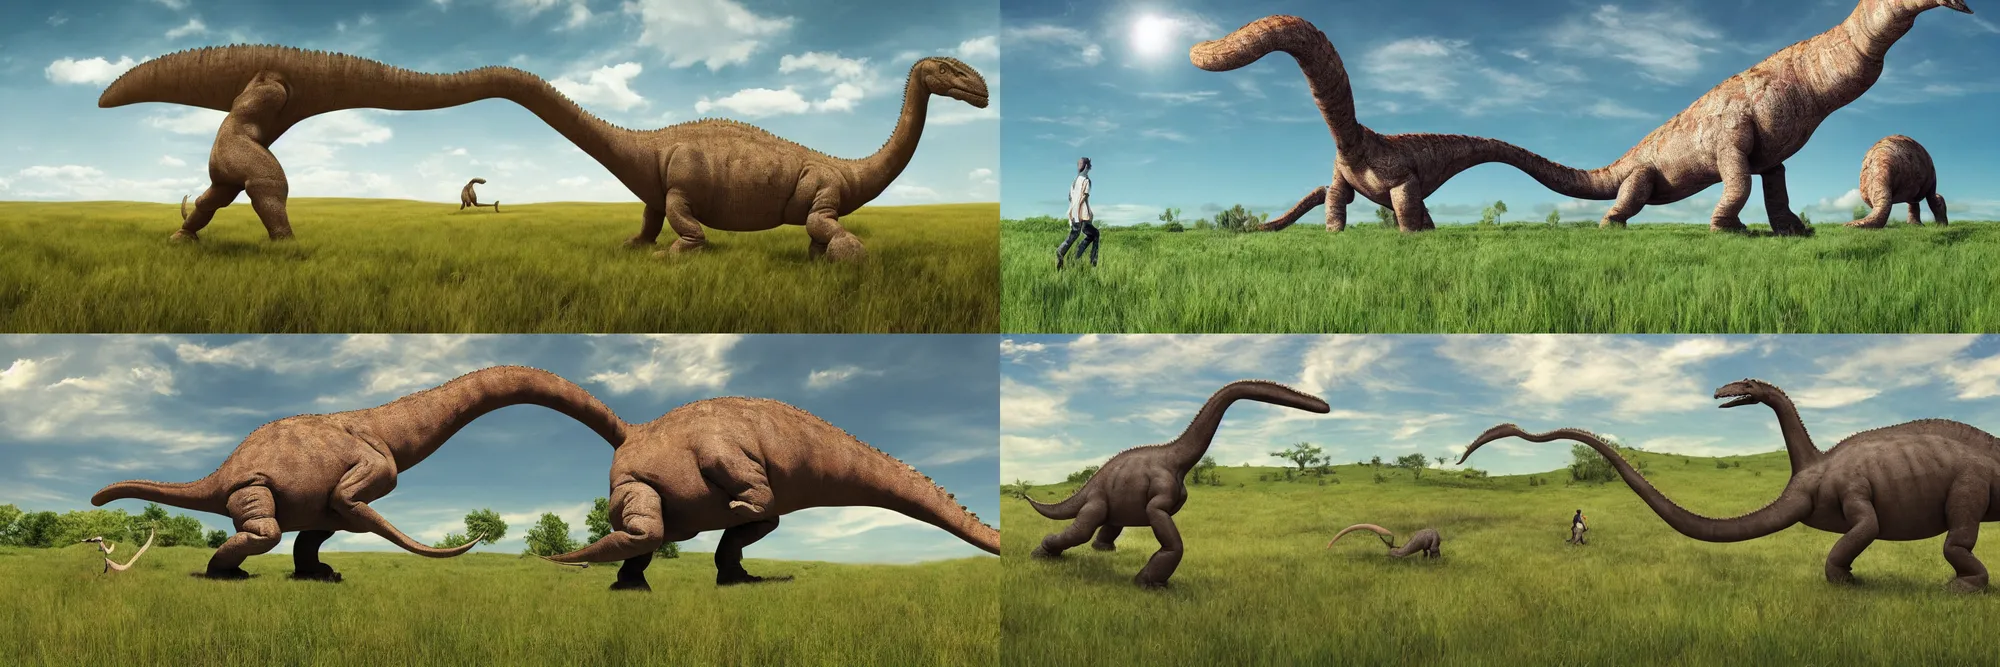 Prompt: a gigantic sauropod dinosaur walking through a grassy plain